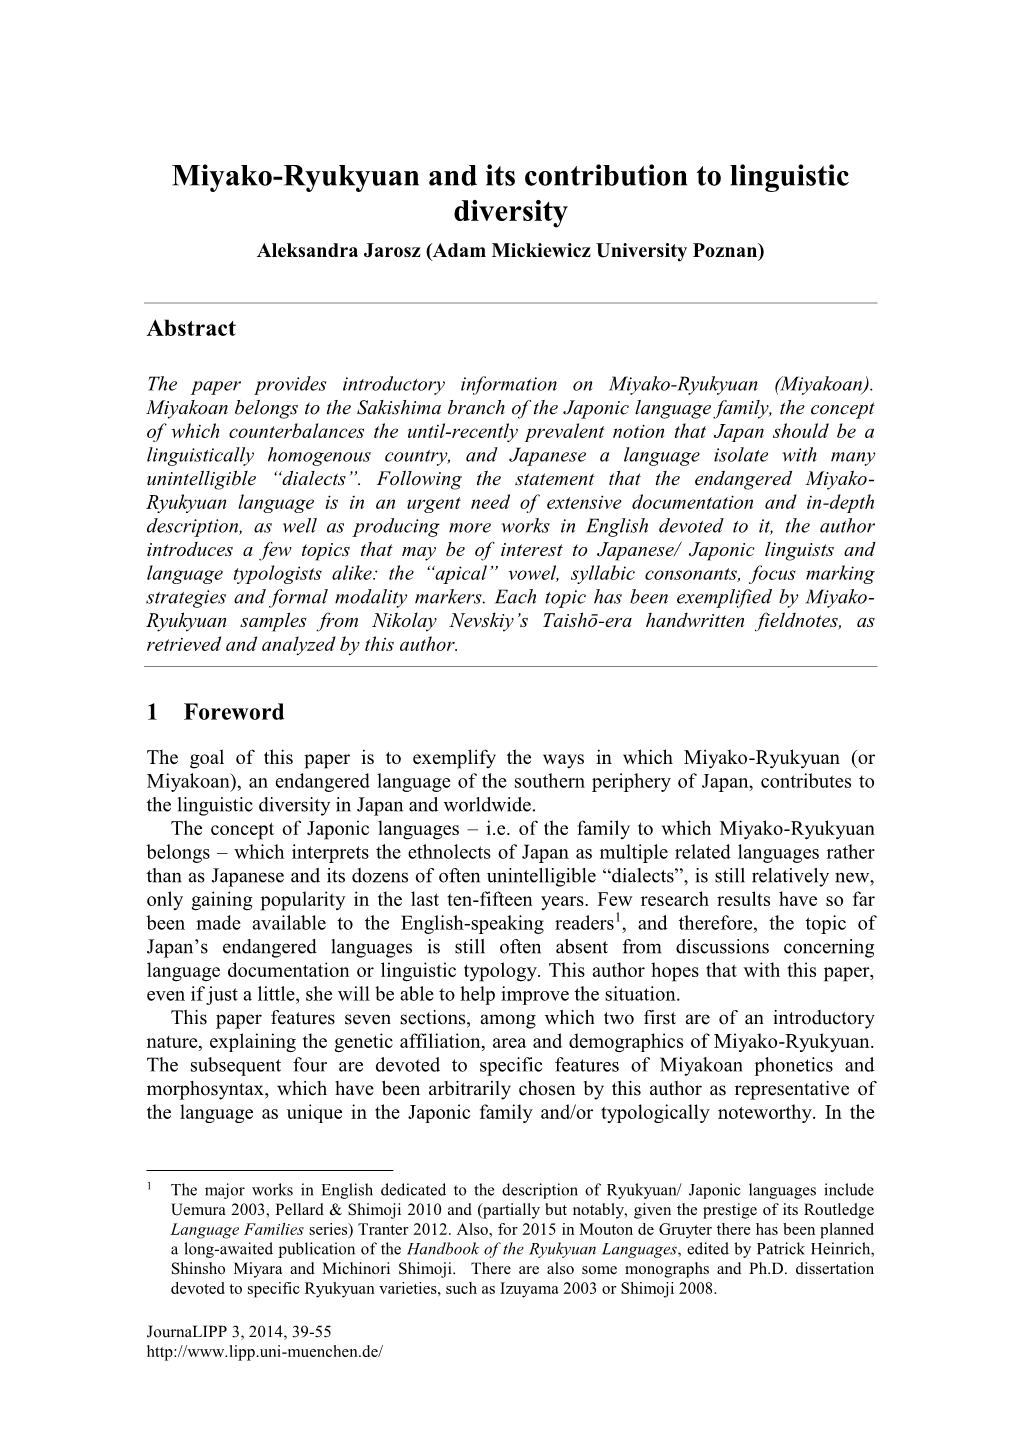 Aleksandra Jarosz, Miyako-Ryukyuan and Its Contribution to Linguistic